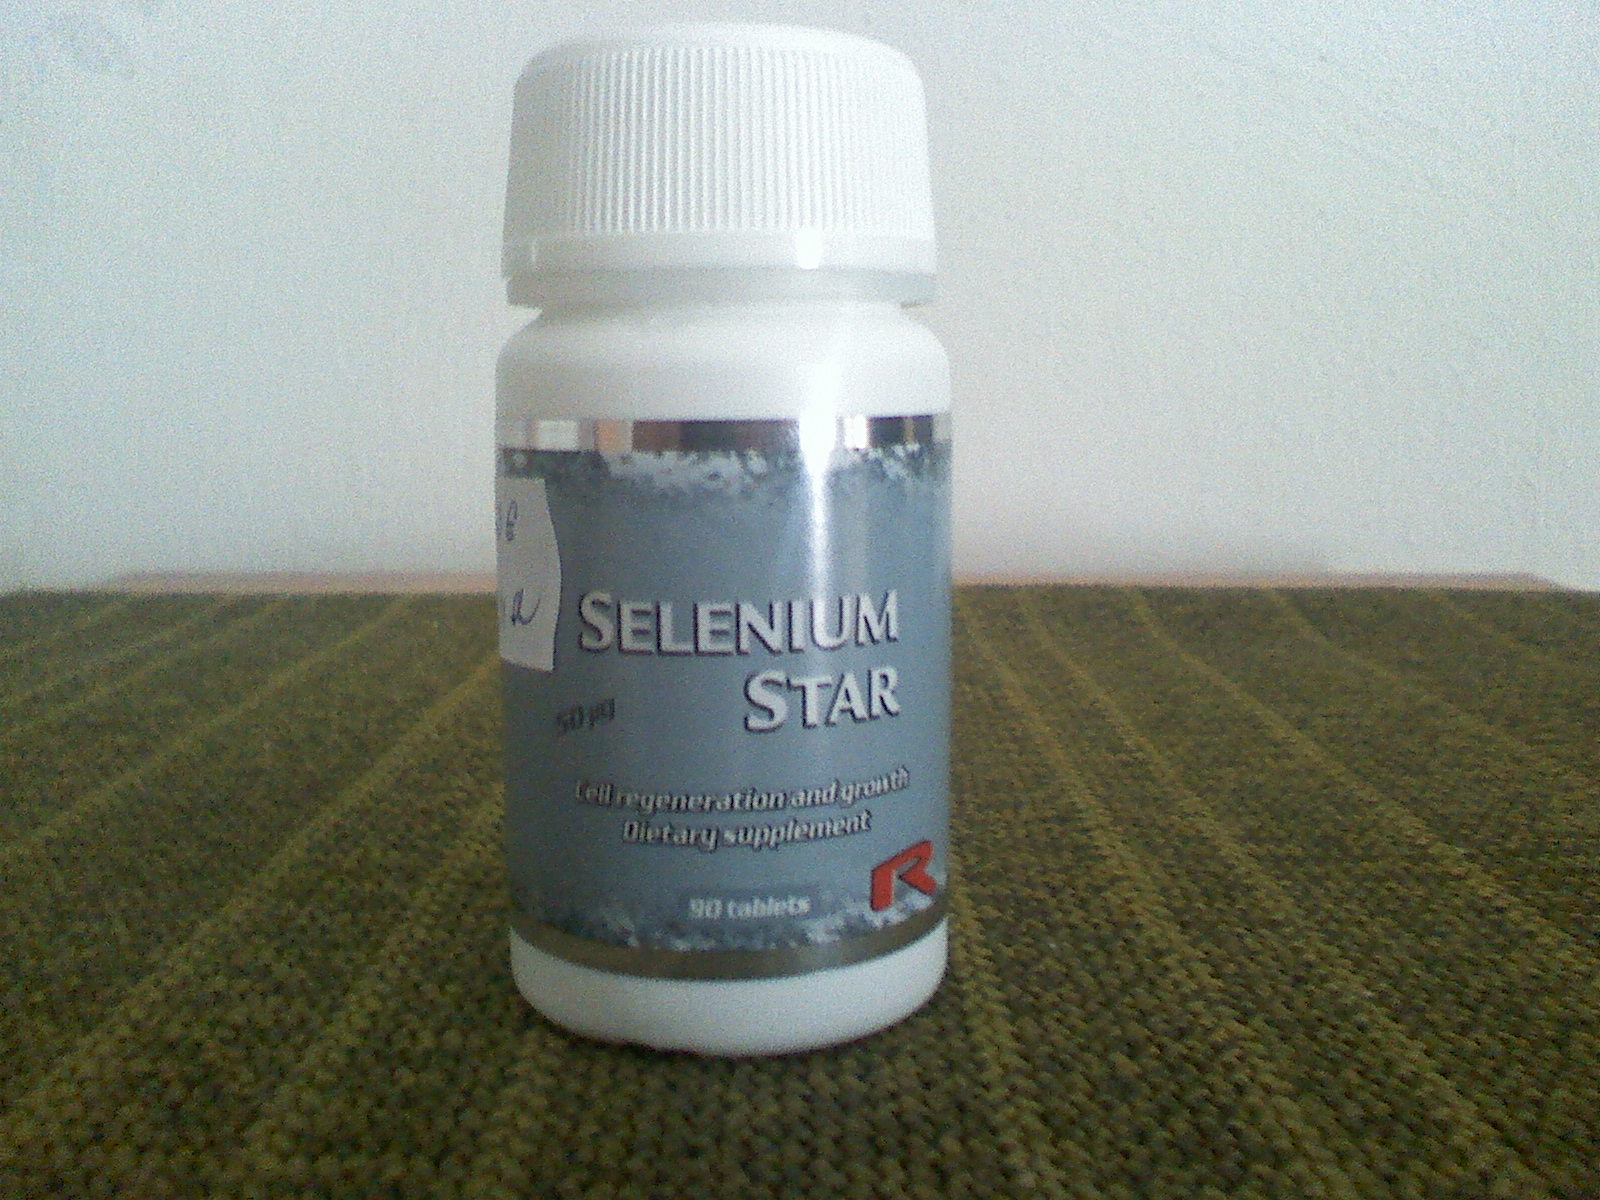 Selenium Star